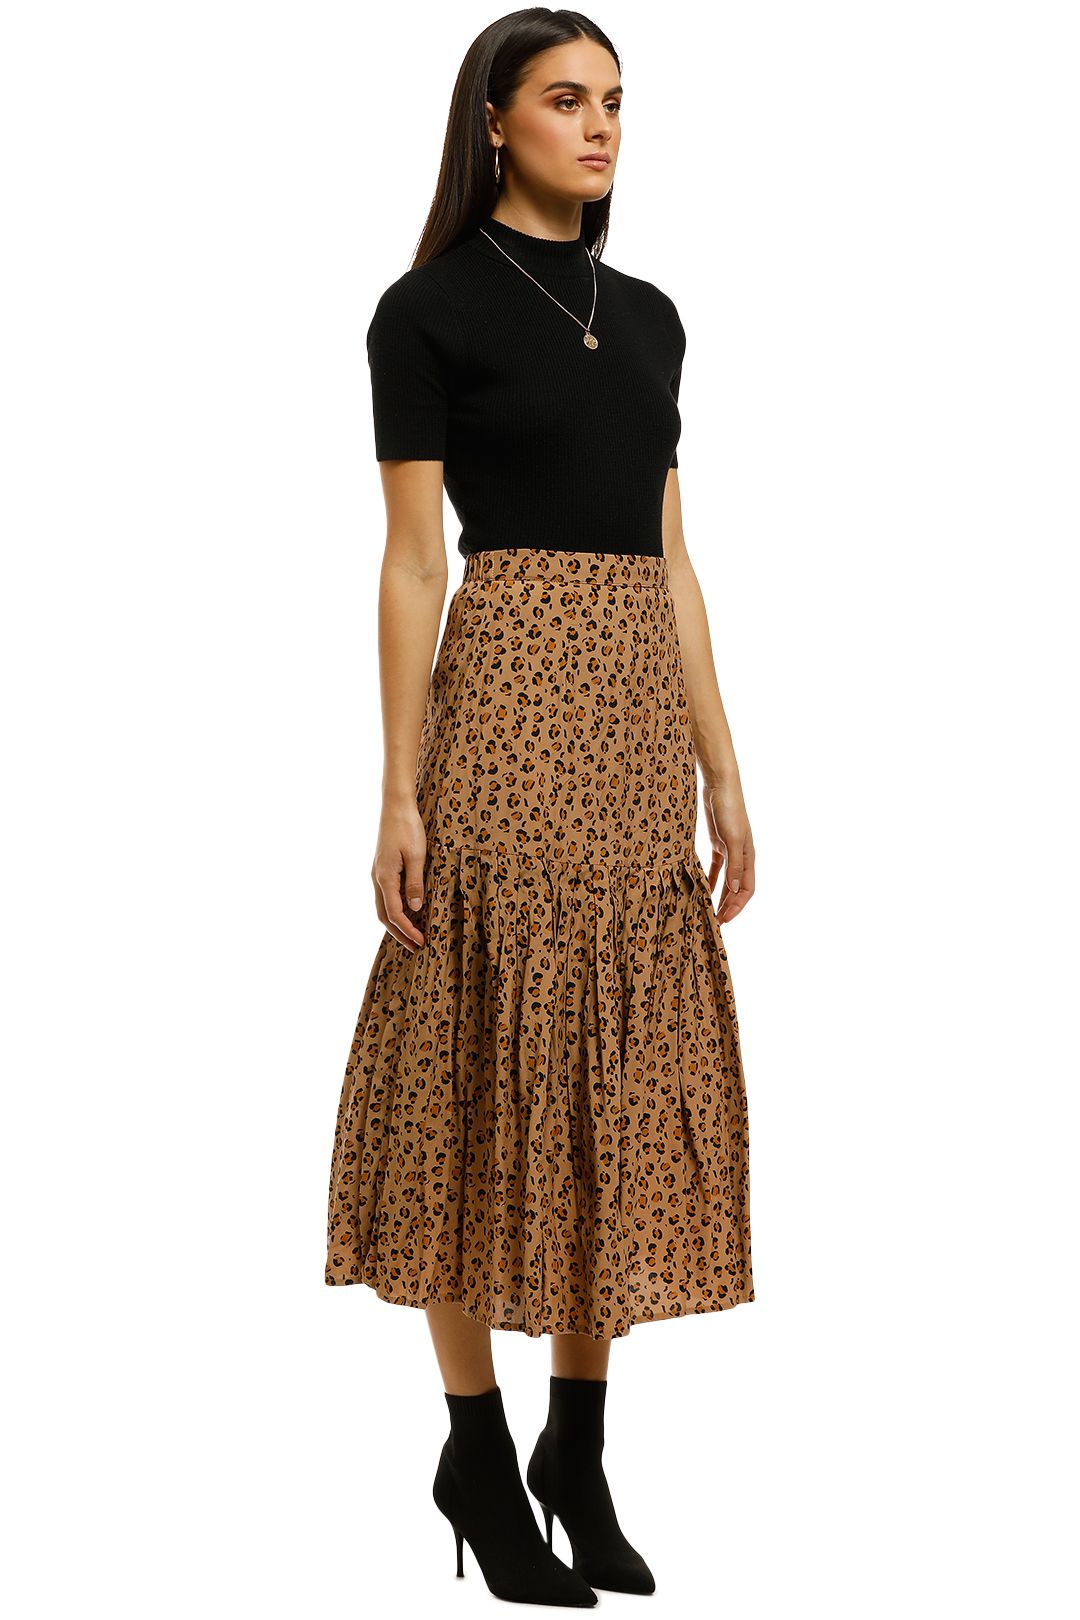 Rue-Stiic-Newport-Pleat-Skirt-Leopard-Side